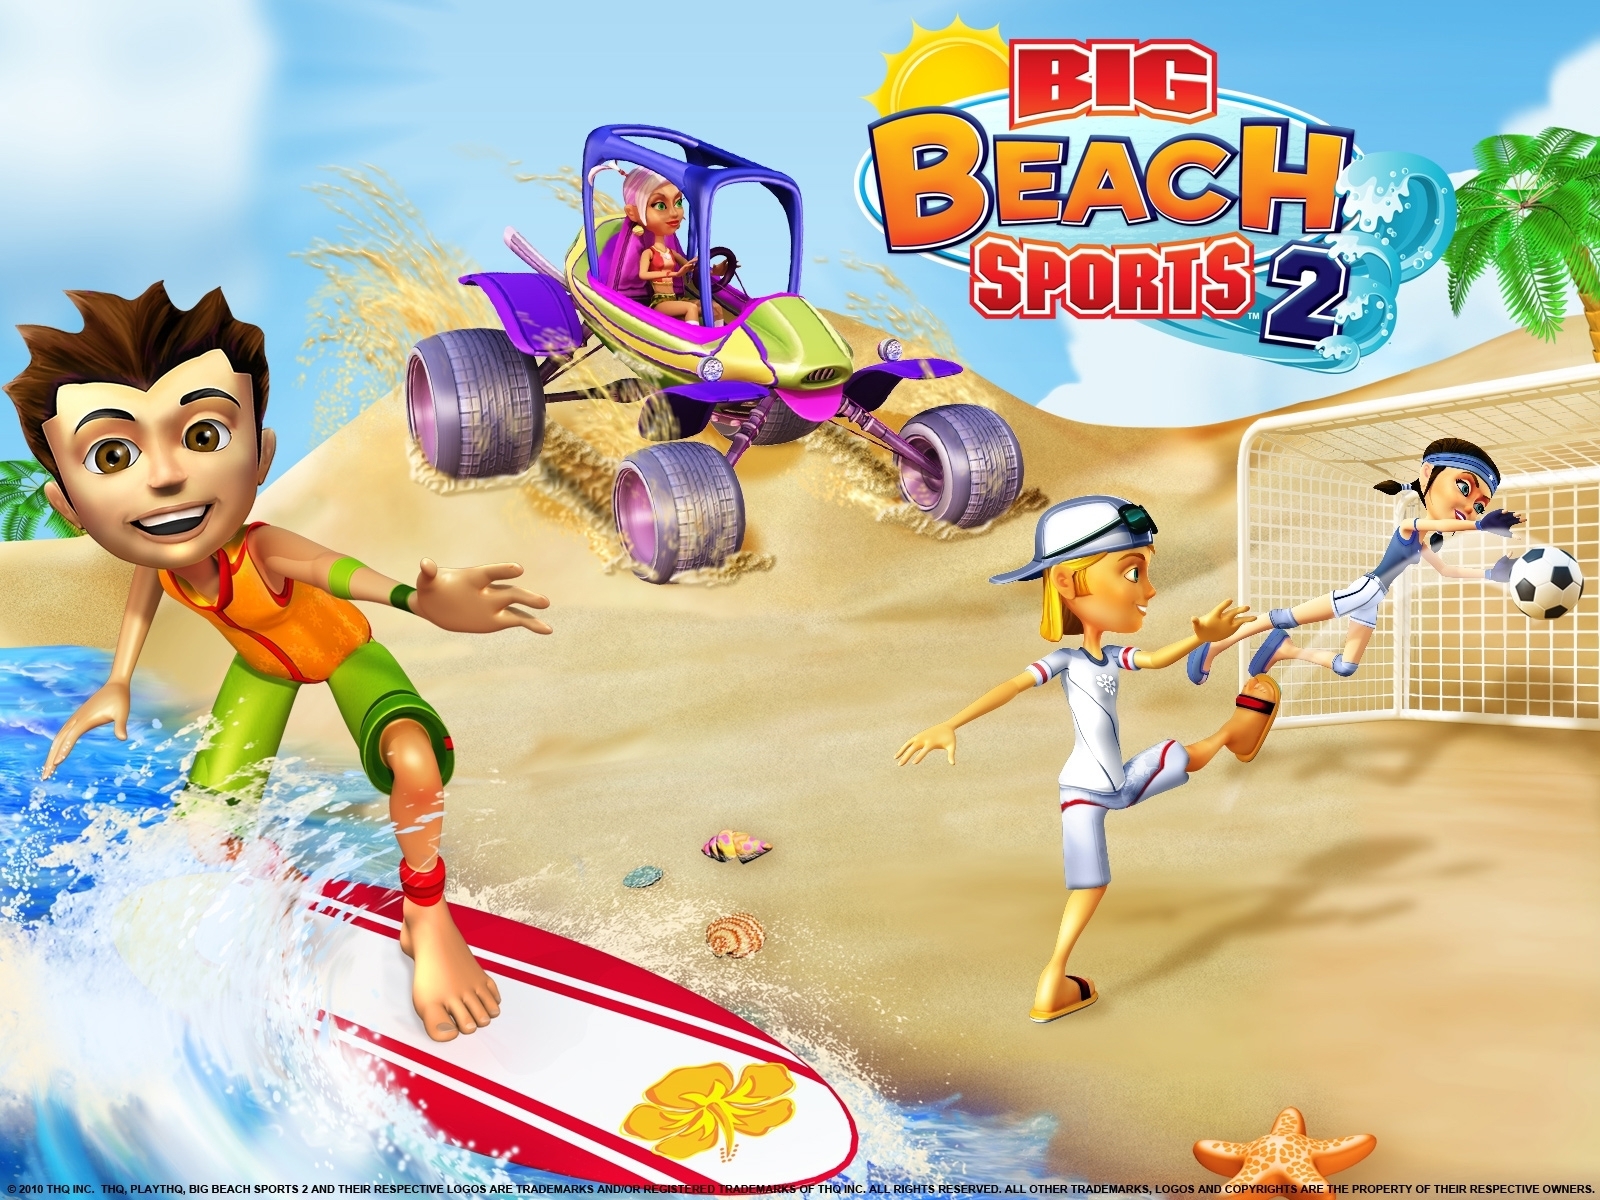 Big Beach Sports 2 for 1600 x 1200 resolution